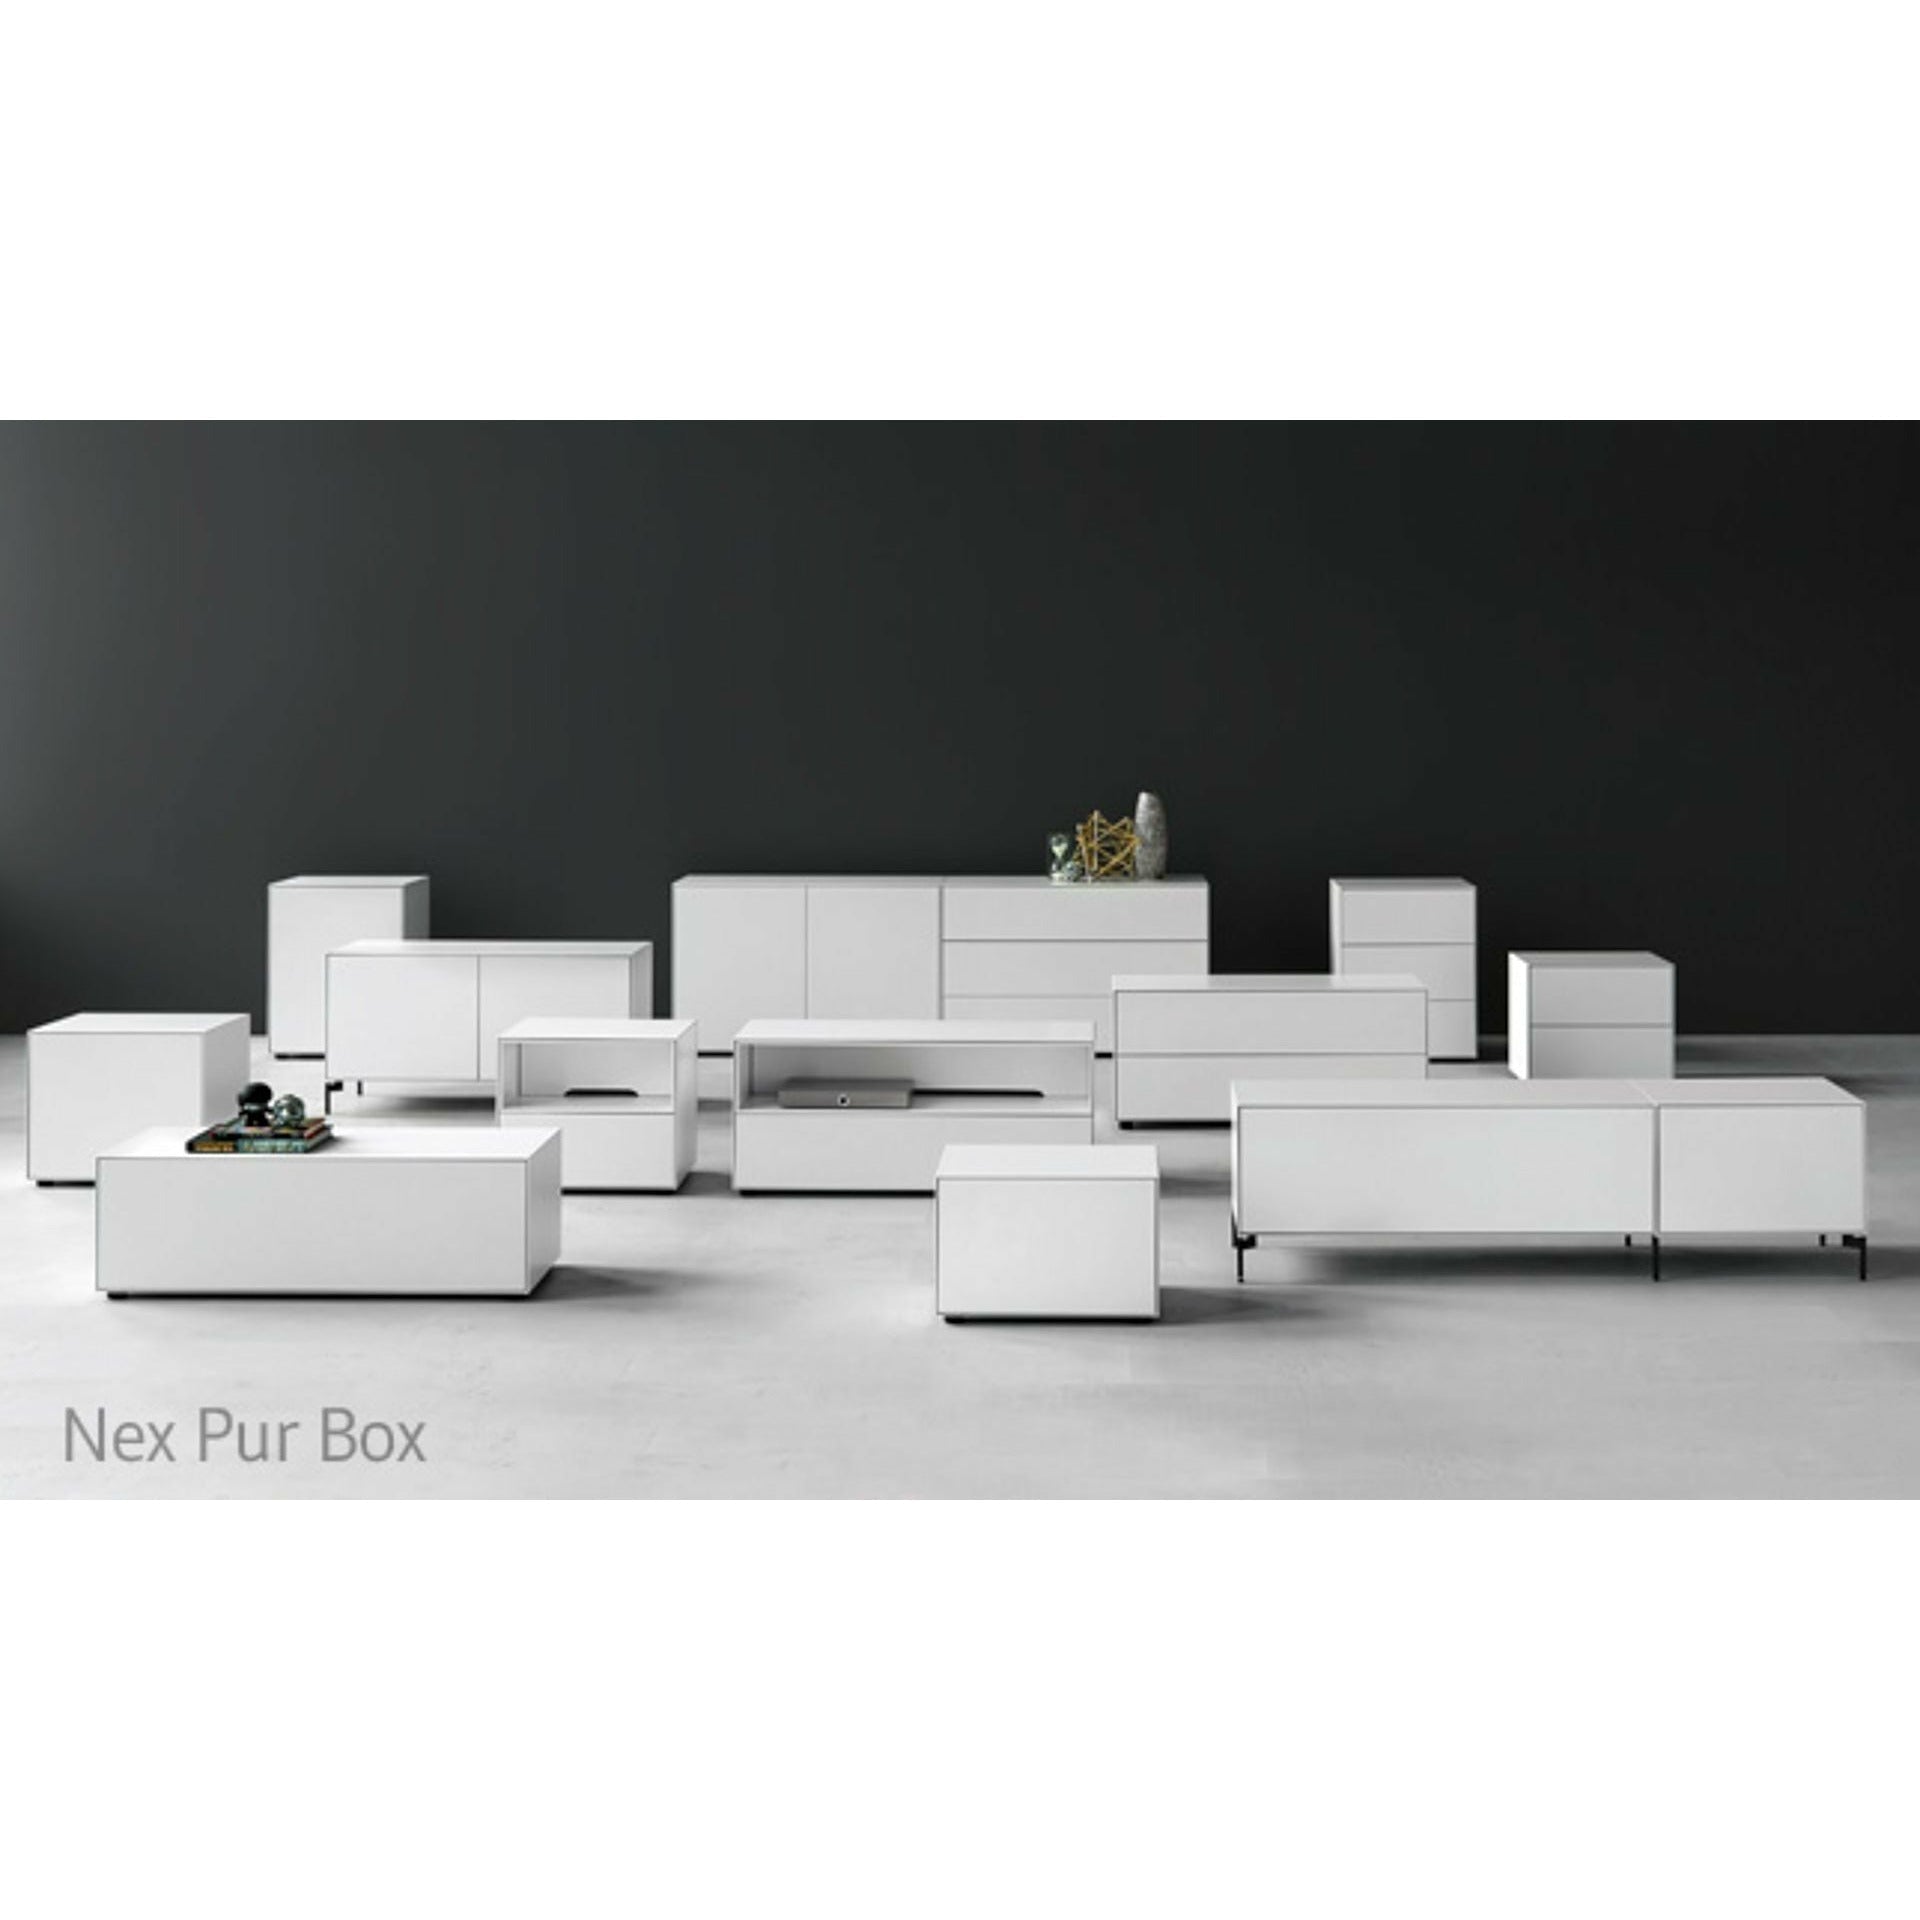 Piure Nex Pur Box Door Hx W 75x120 Cm, 1 Shelf, White